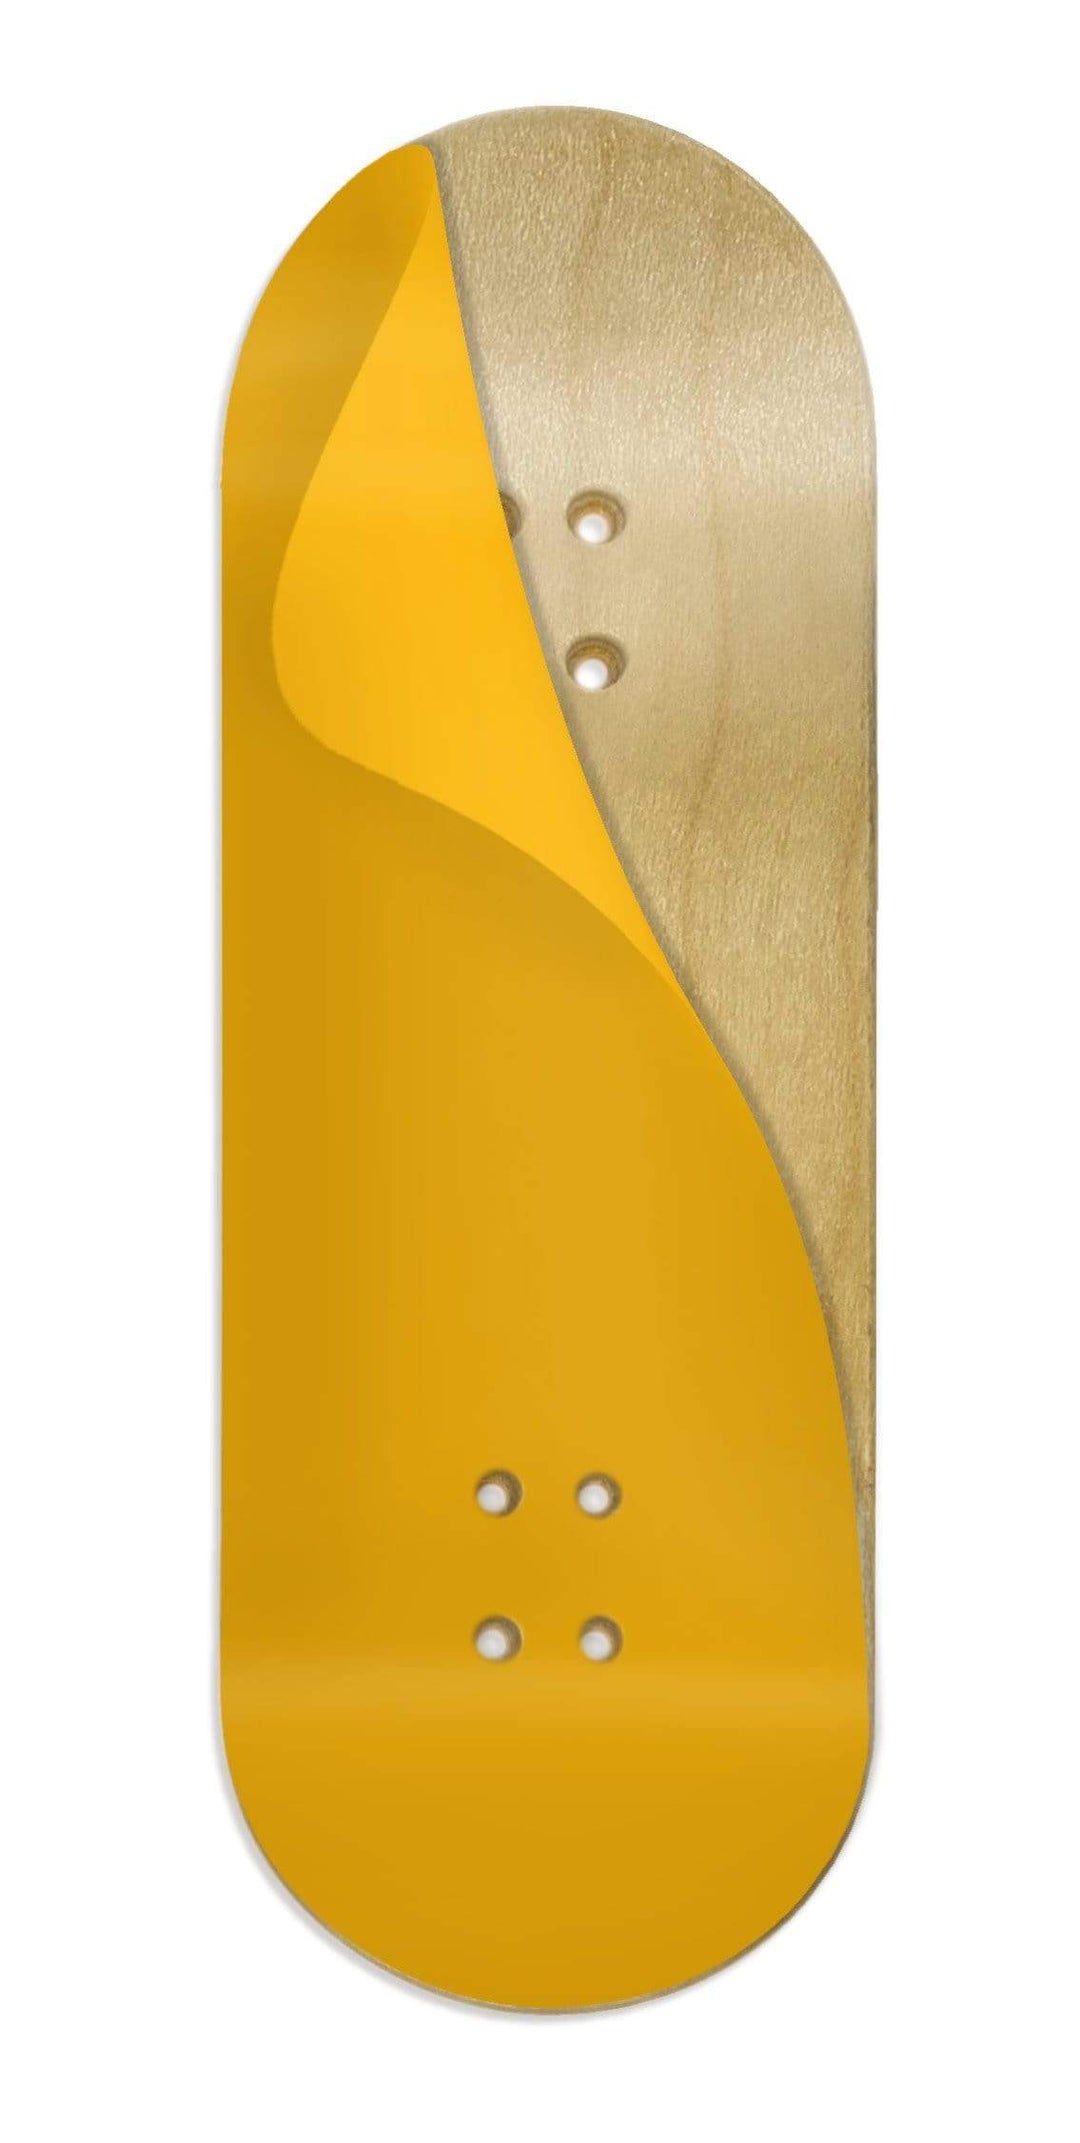 Teak Tuning Teak Swap Fingerboard Deck & ColorBlock Wrap - "Honey Gold" - 32mm x 97mm